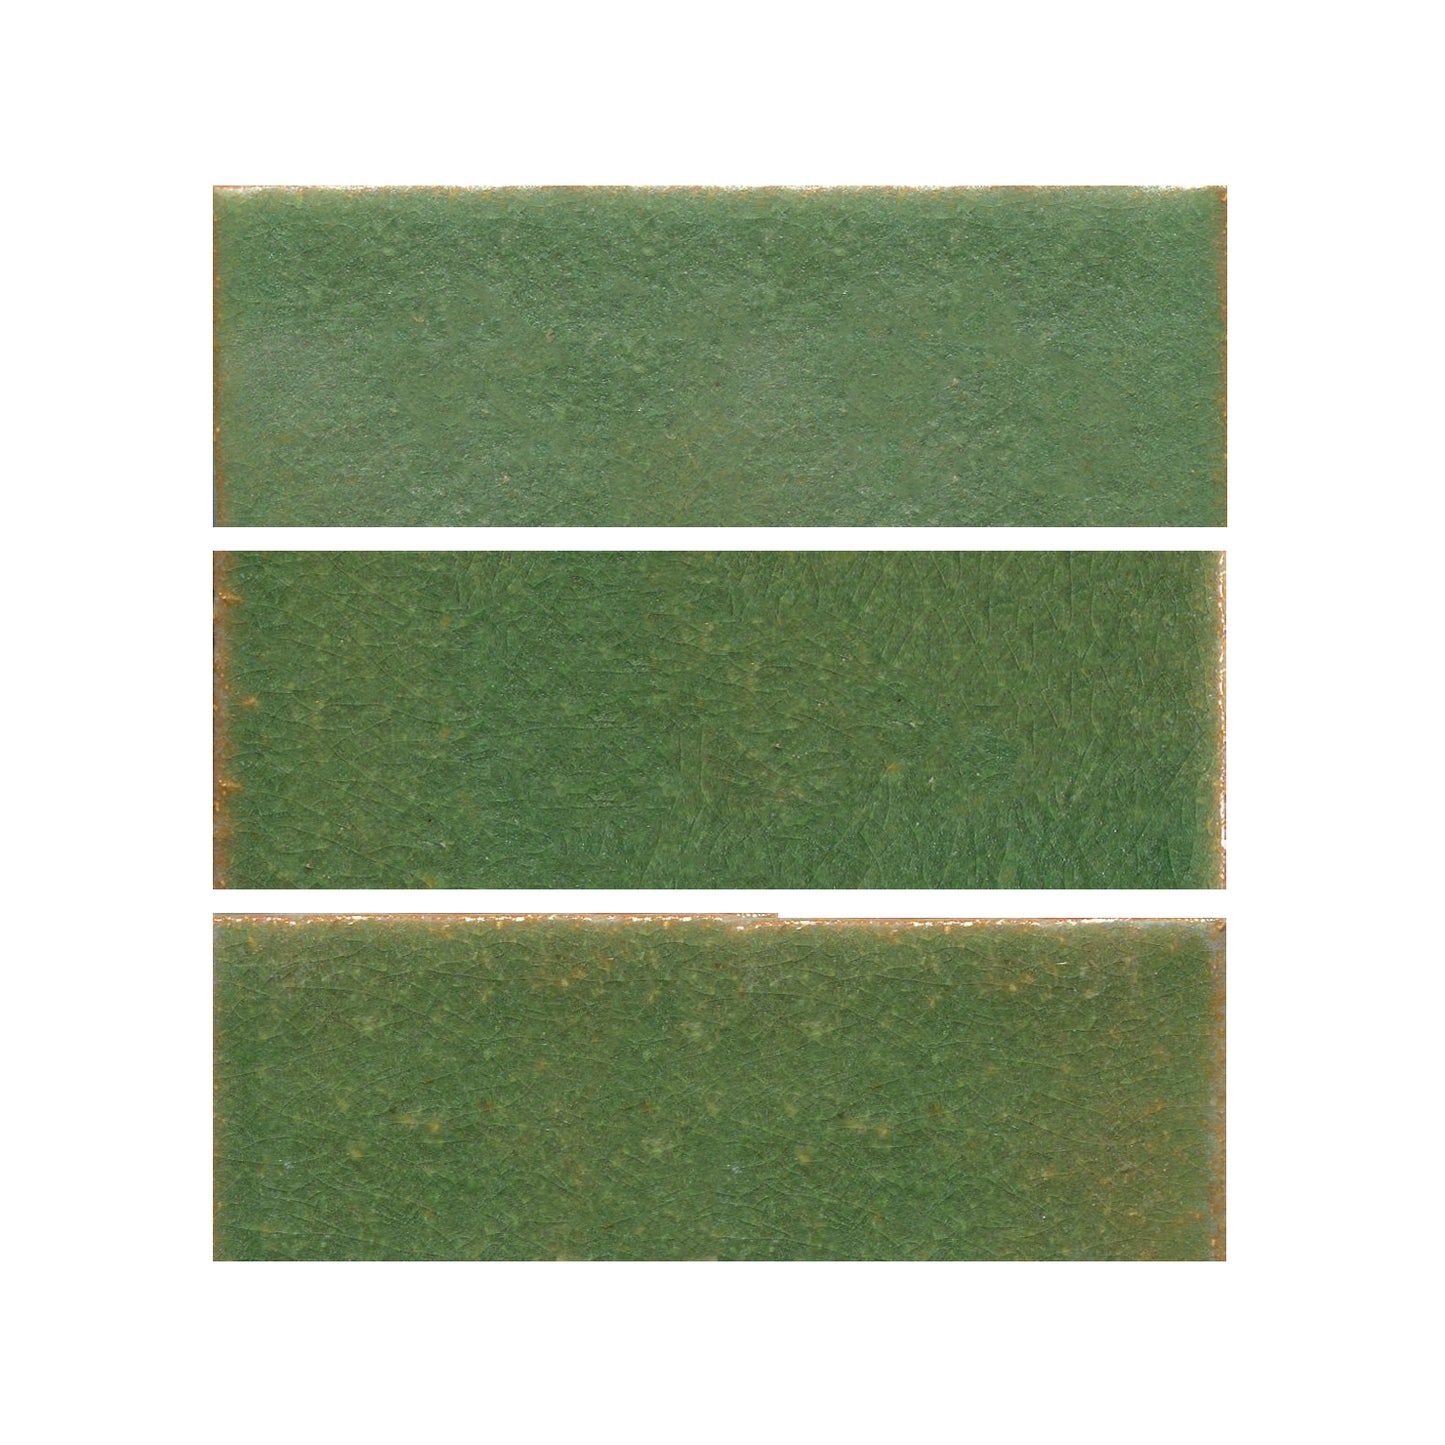 Avocado green 3x6 field tile